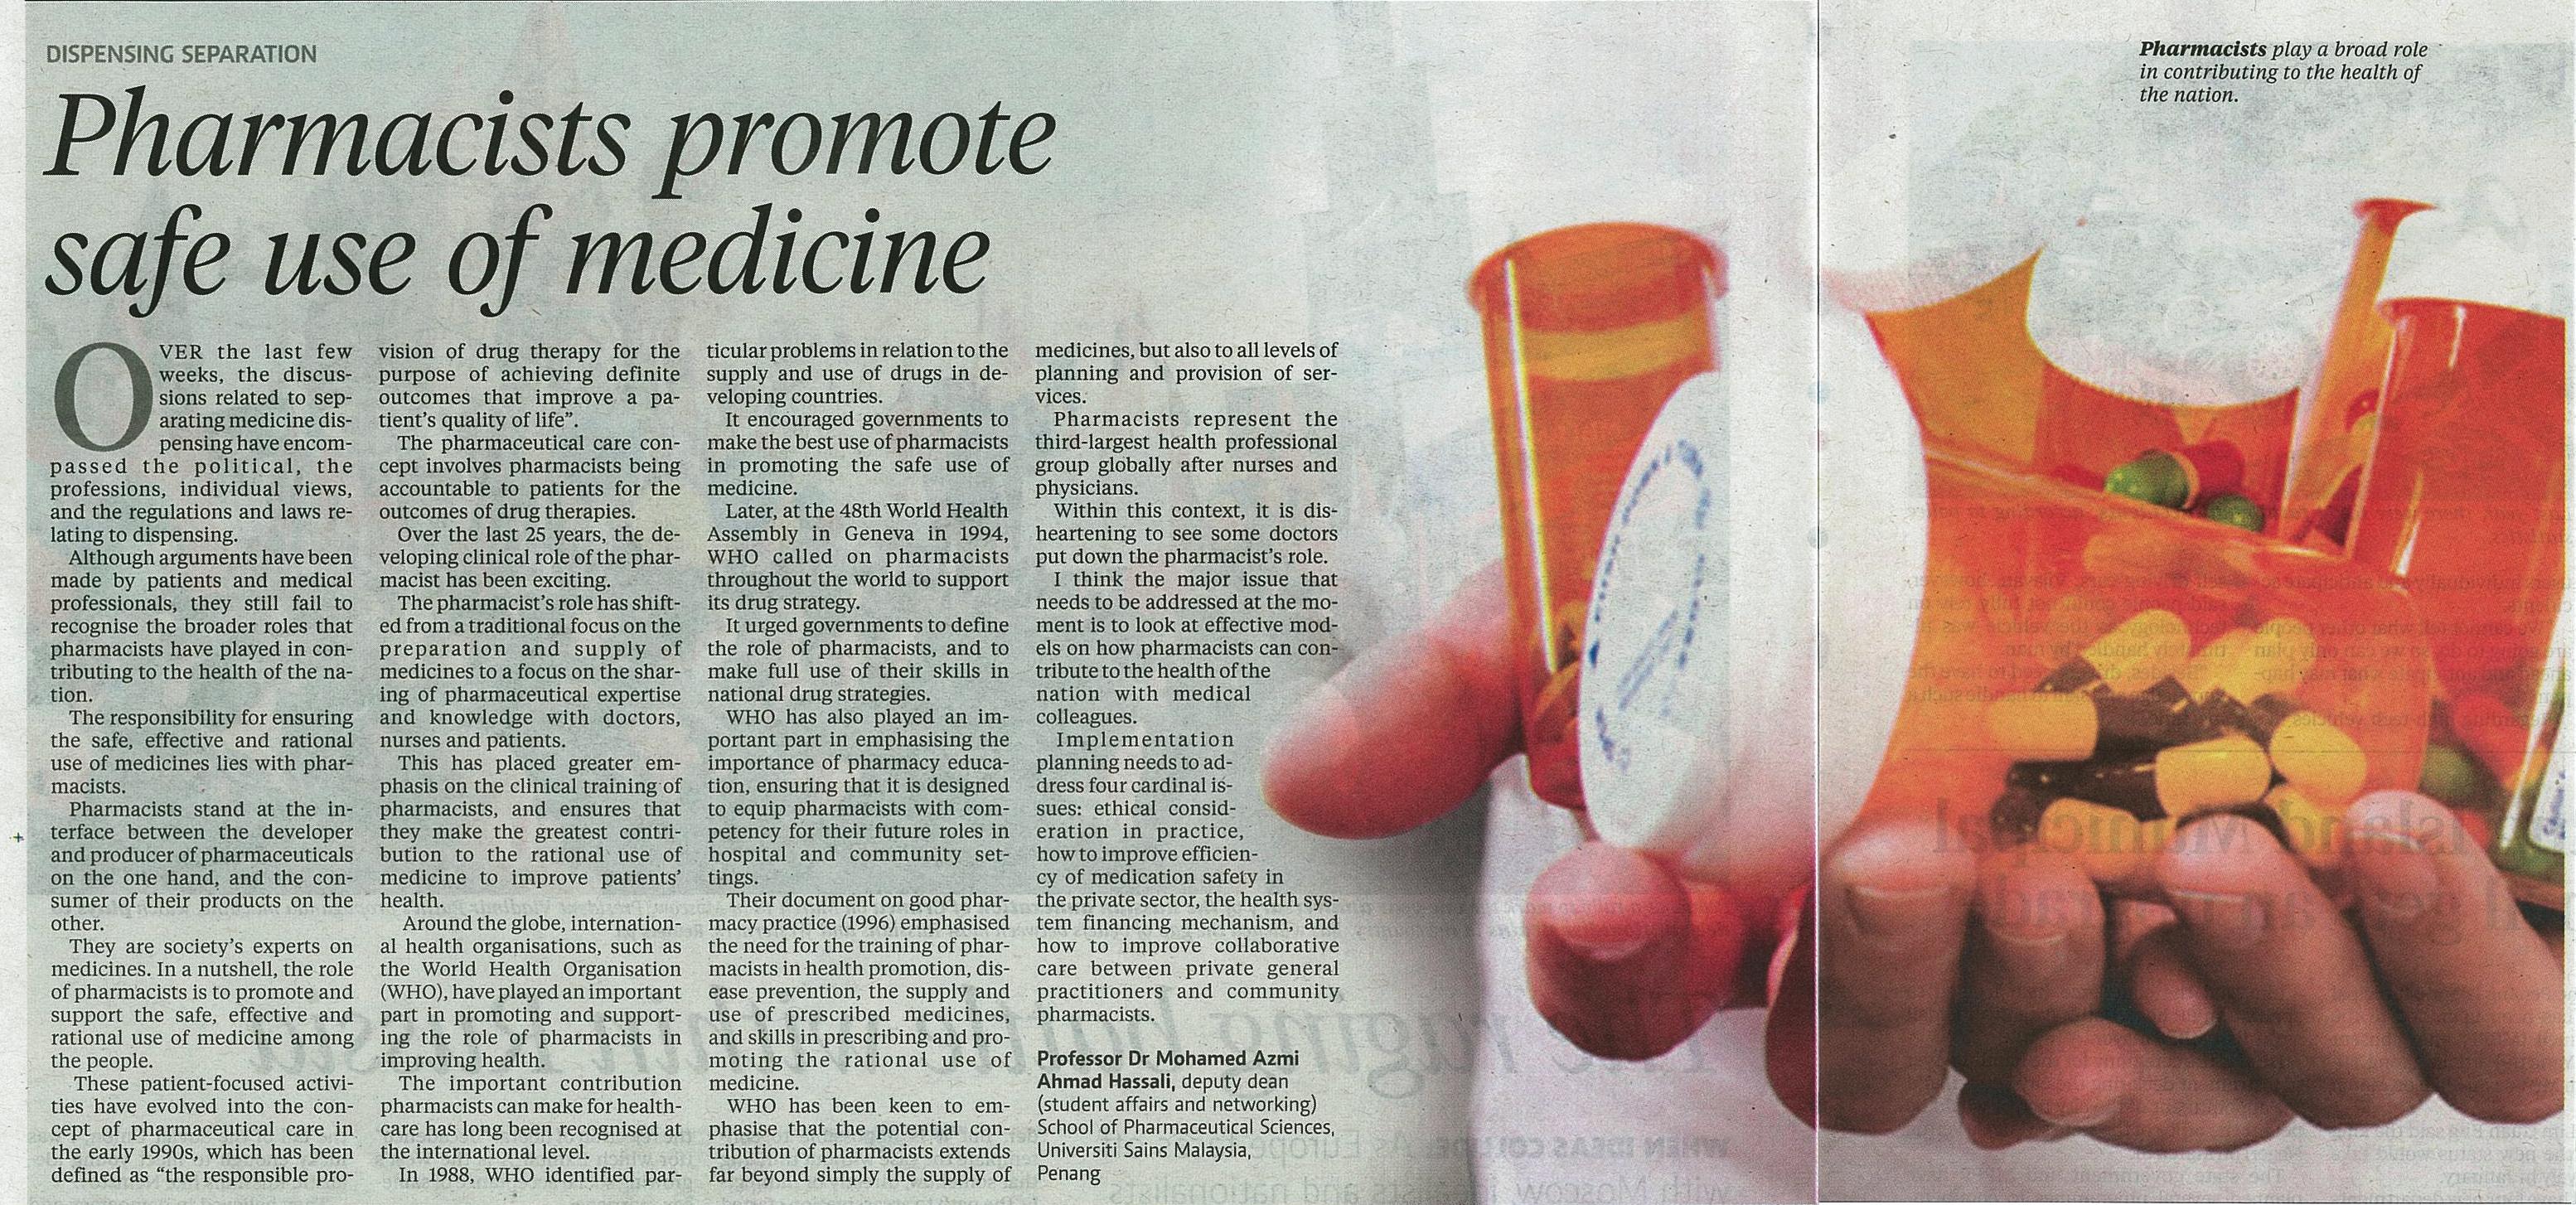 25 Mac 2015 Pharmacists promote safe use of medicine NST